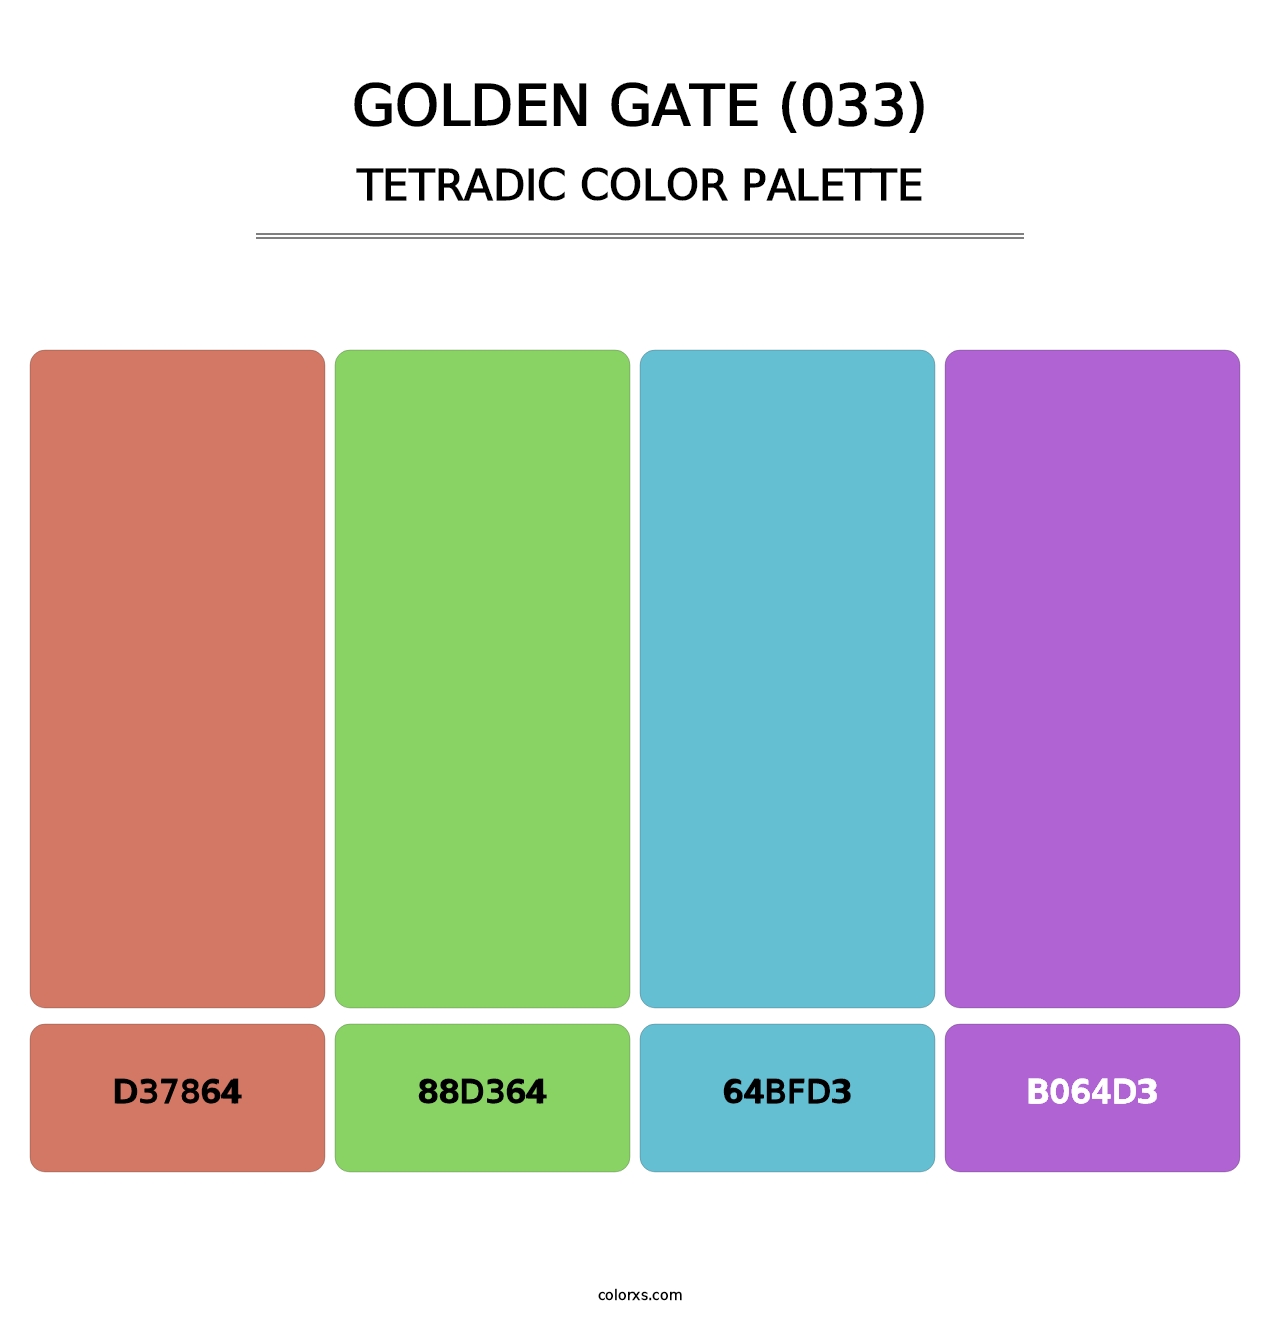 Golden Gate (033) - Tetradic Color Palette